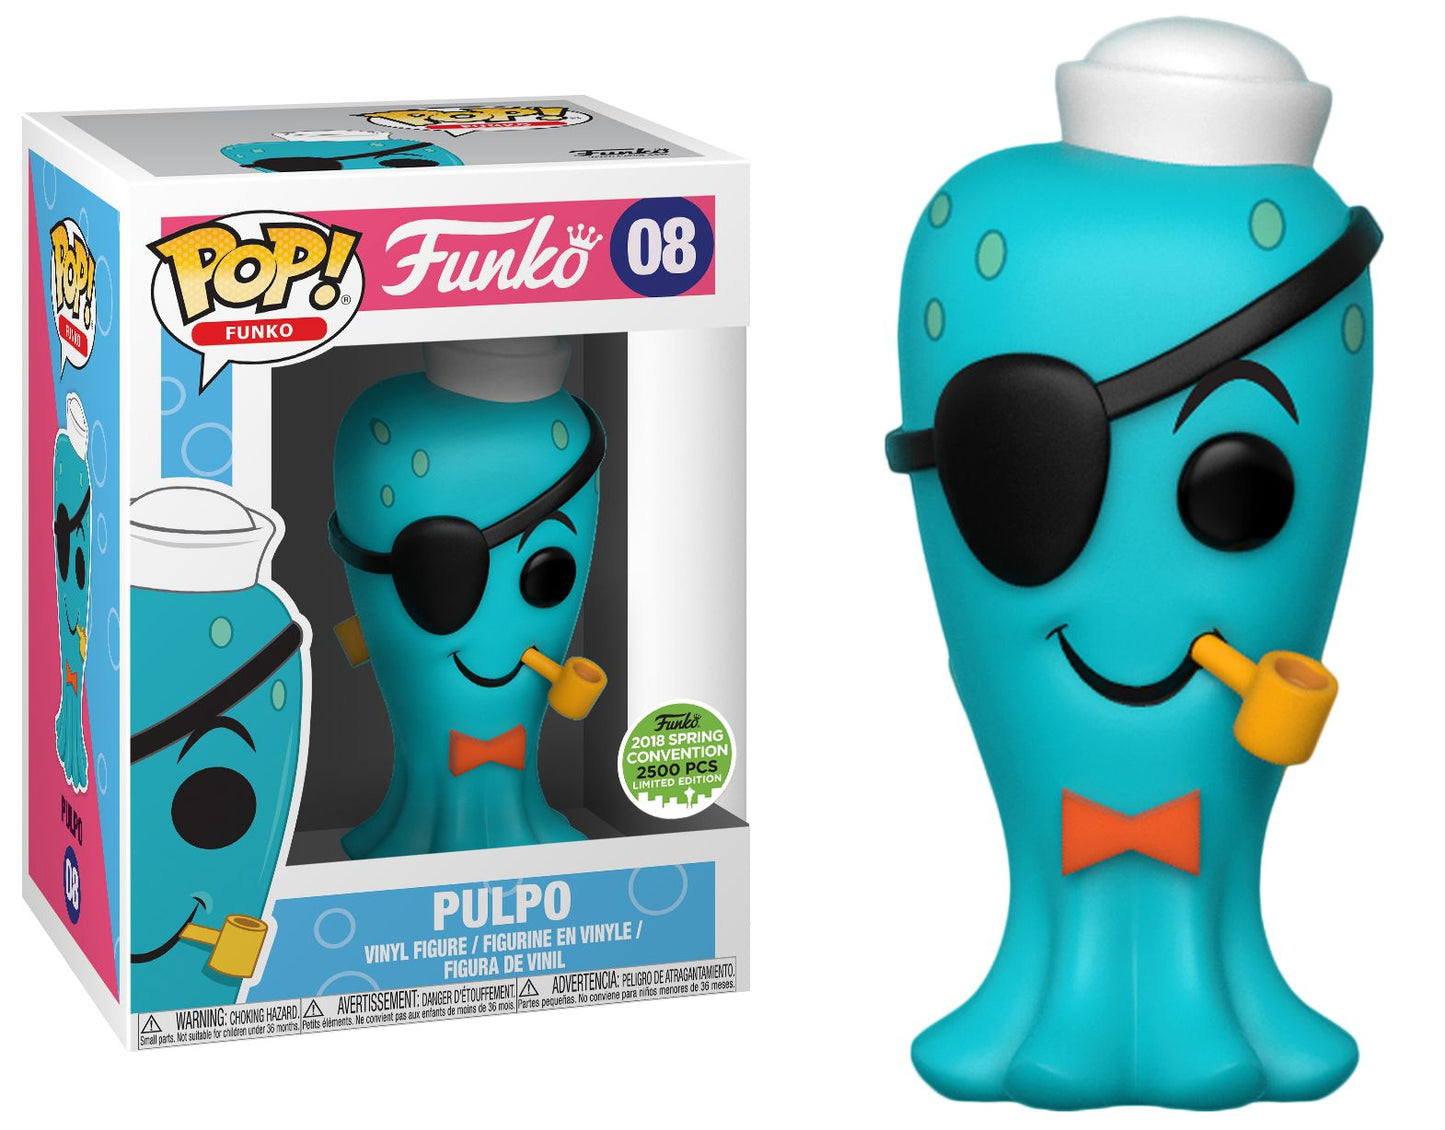 Funko POP! Spastik Plastik Pulpo #08 [Blue] LE 2500 Funko Shop Exclusive